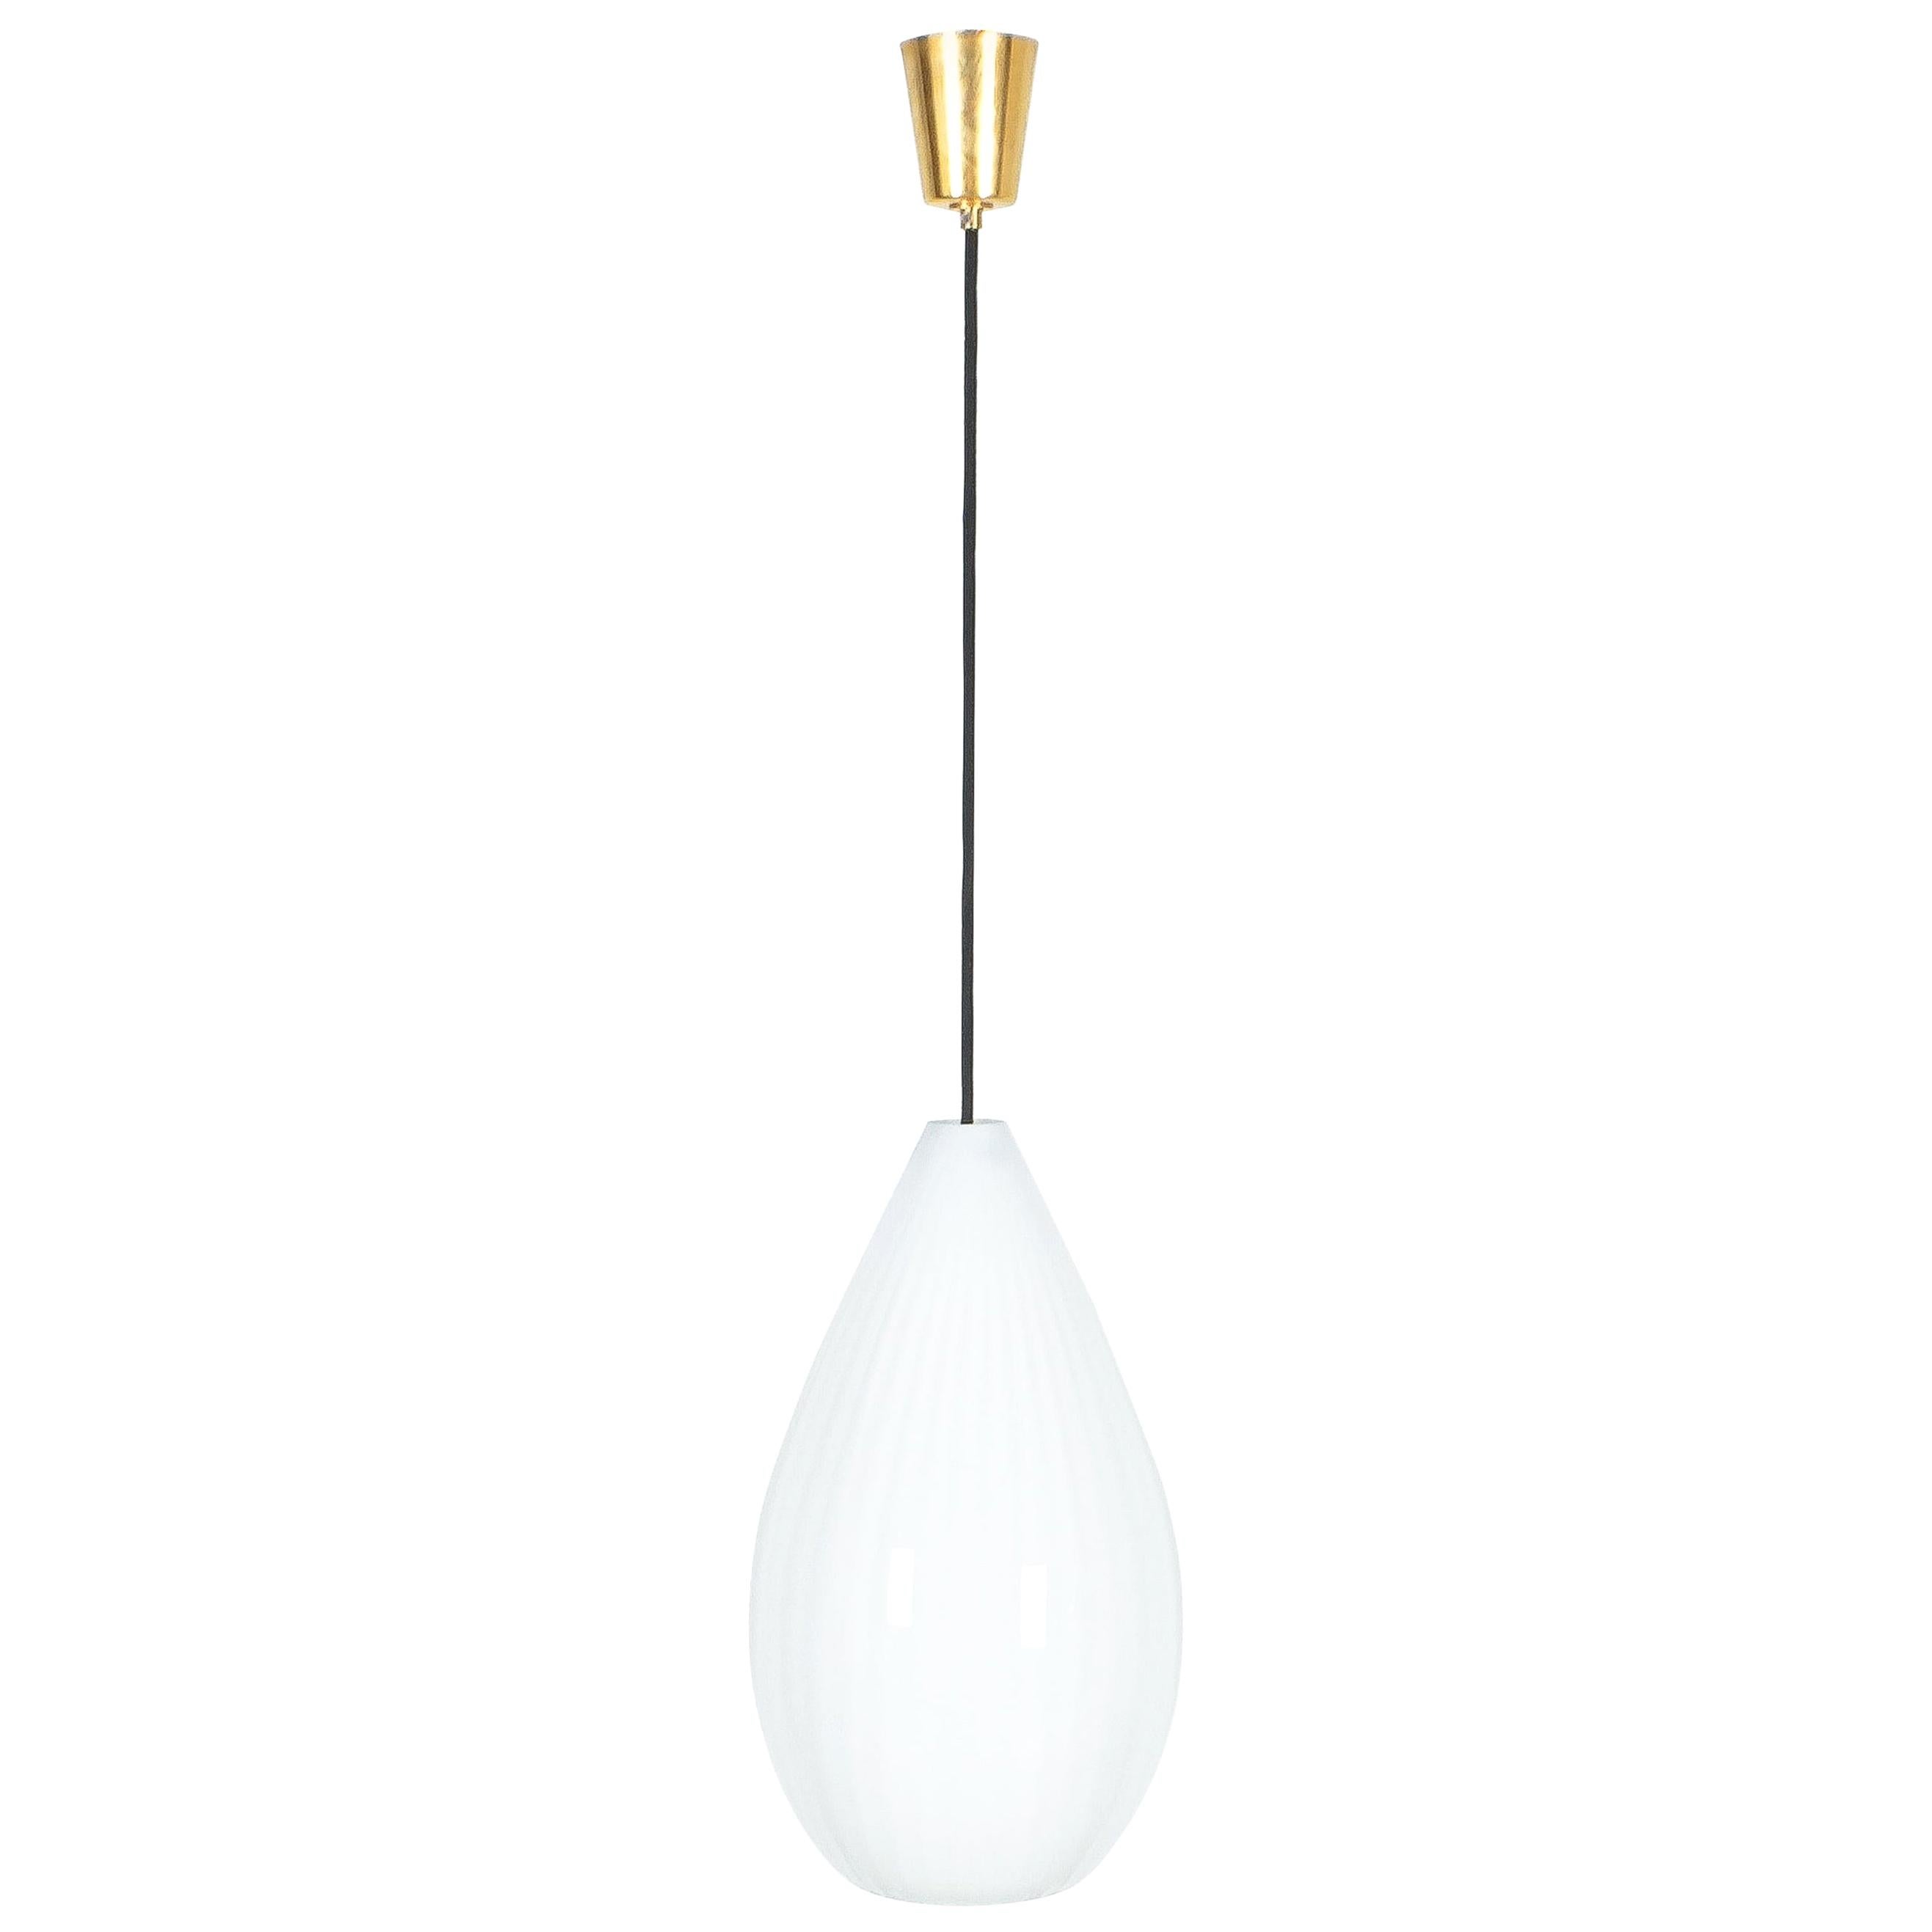 Massimo Vignelli Style Striped Murano Glass Pendant Lamp, Midcentury, Italy For Sale